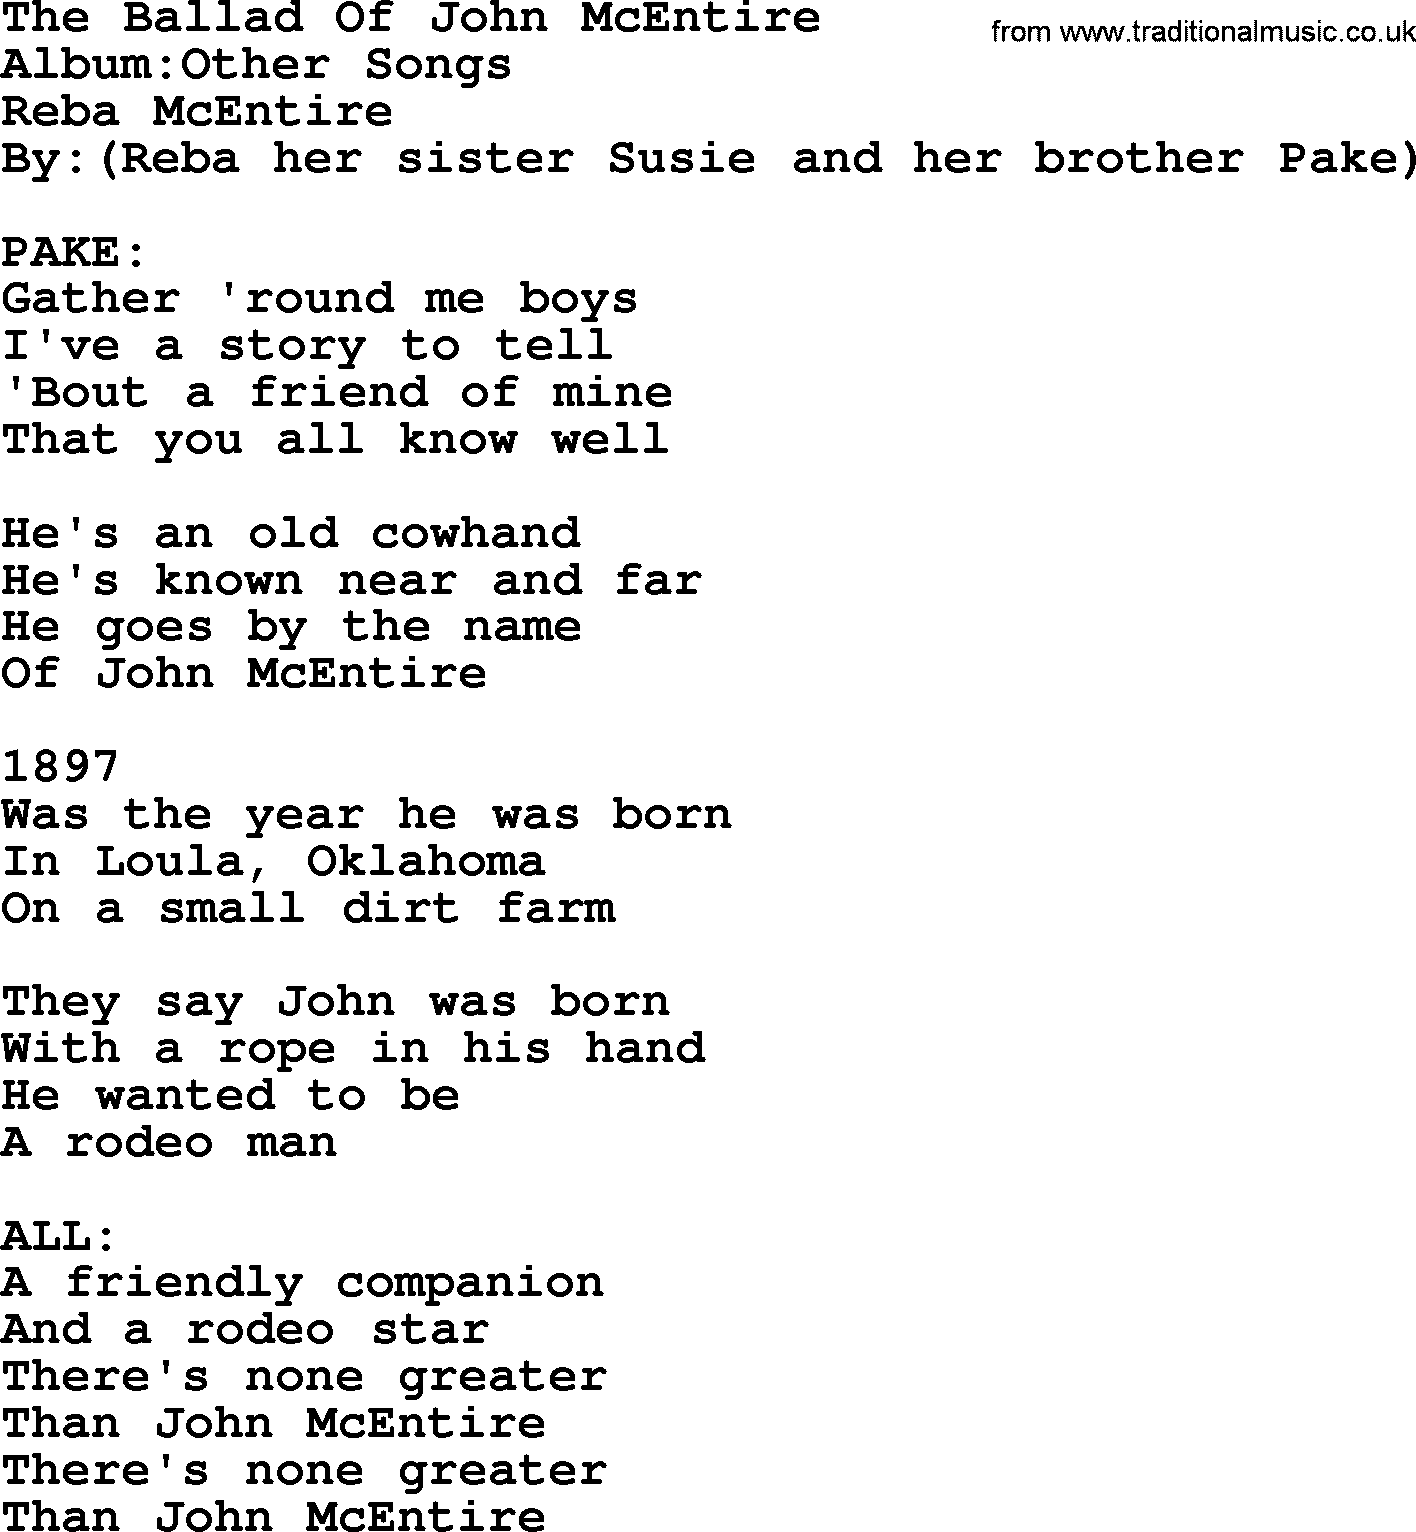 Reba McEntire song: The Ballad Of John McEntire lyrics